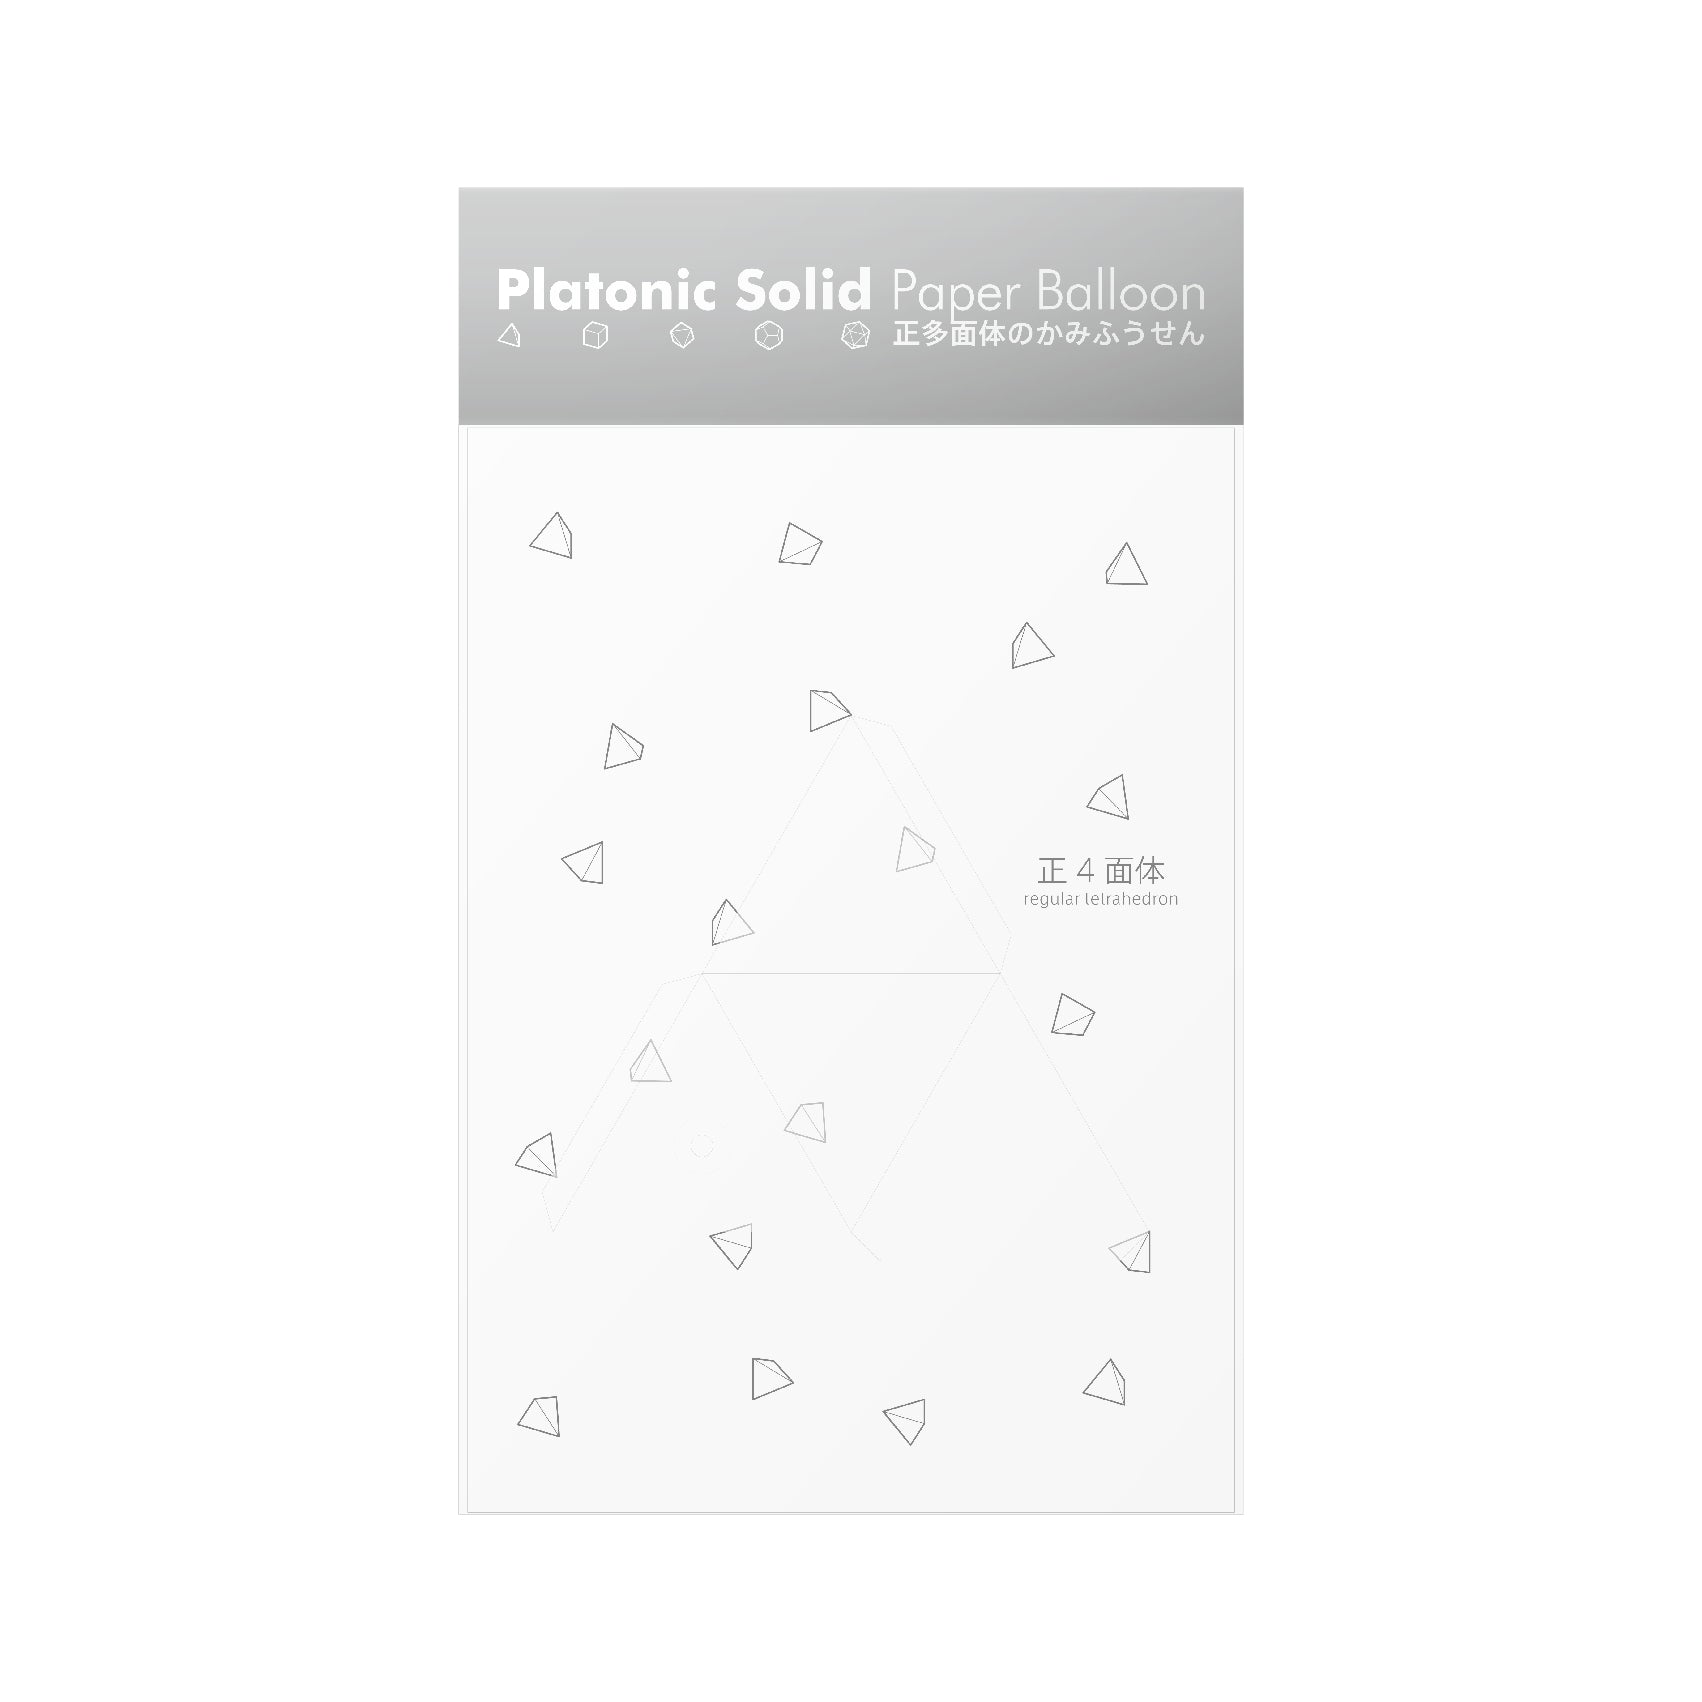 Platonic Solid Paper Balloon